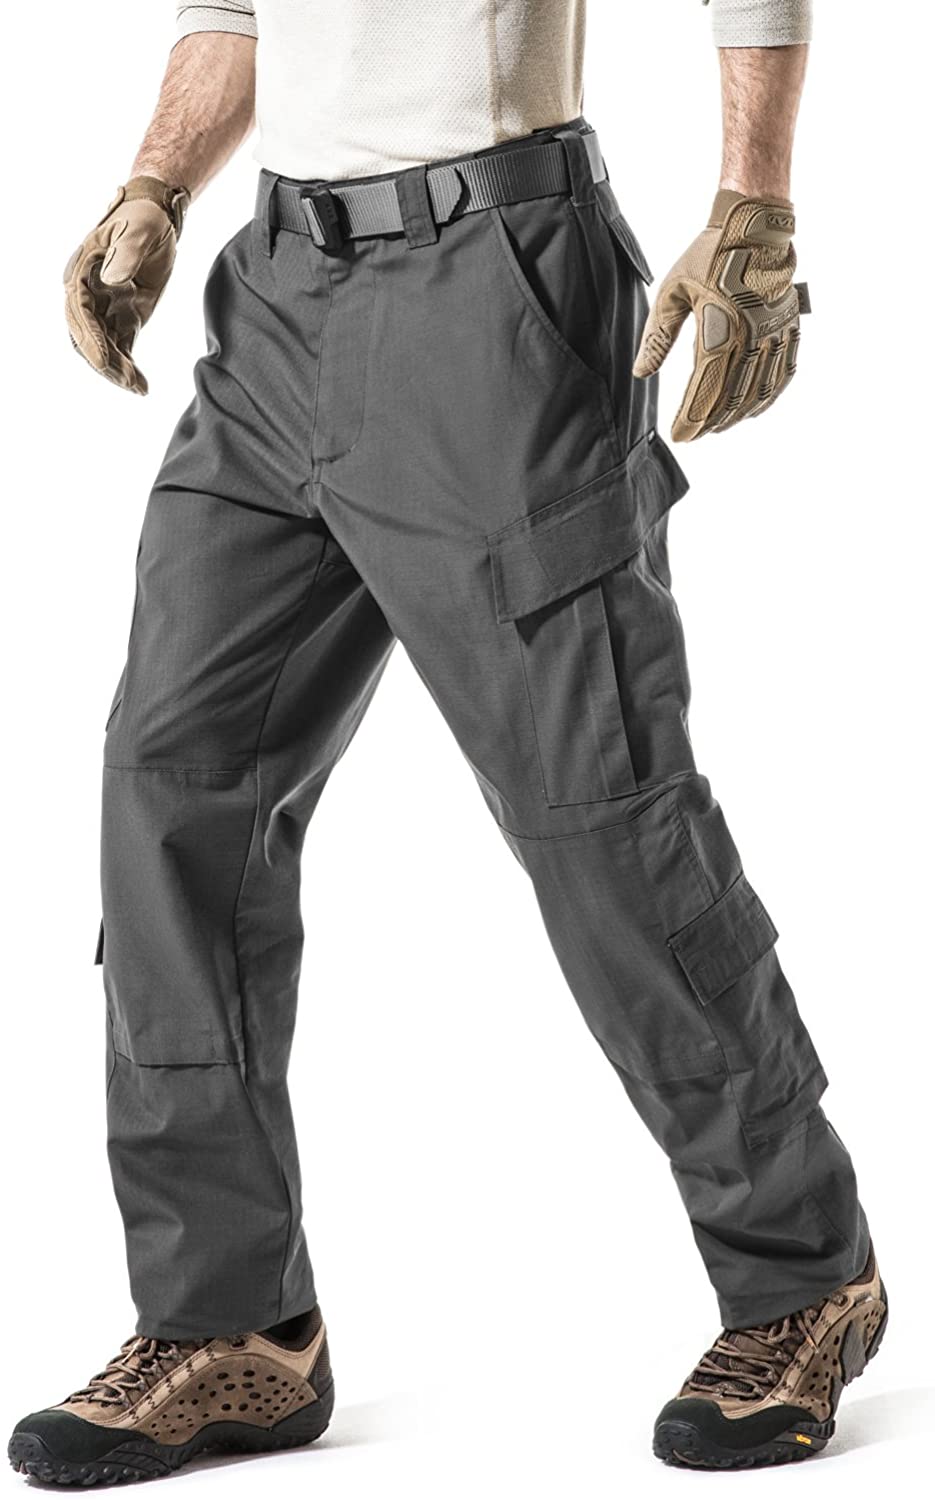 Water Repellent Ripstop Work Pants CQR Men's Tactical Pants Military Combat BDU/ACU Cargo Pants Hiking Outdoor Apparel 